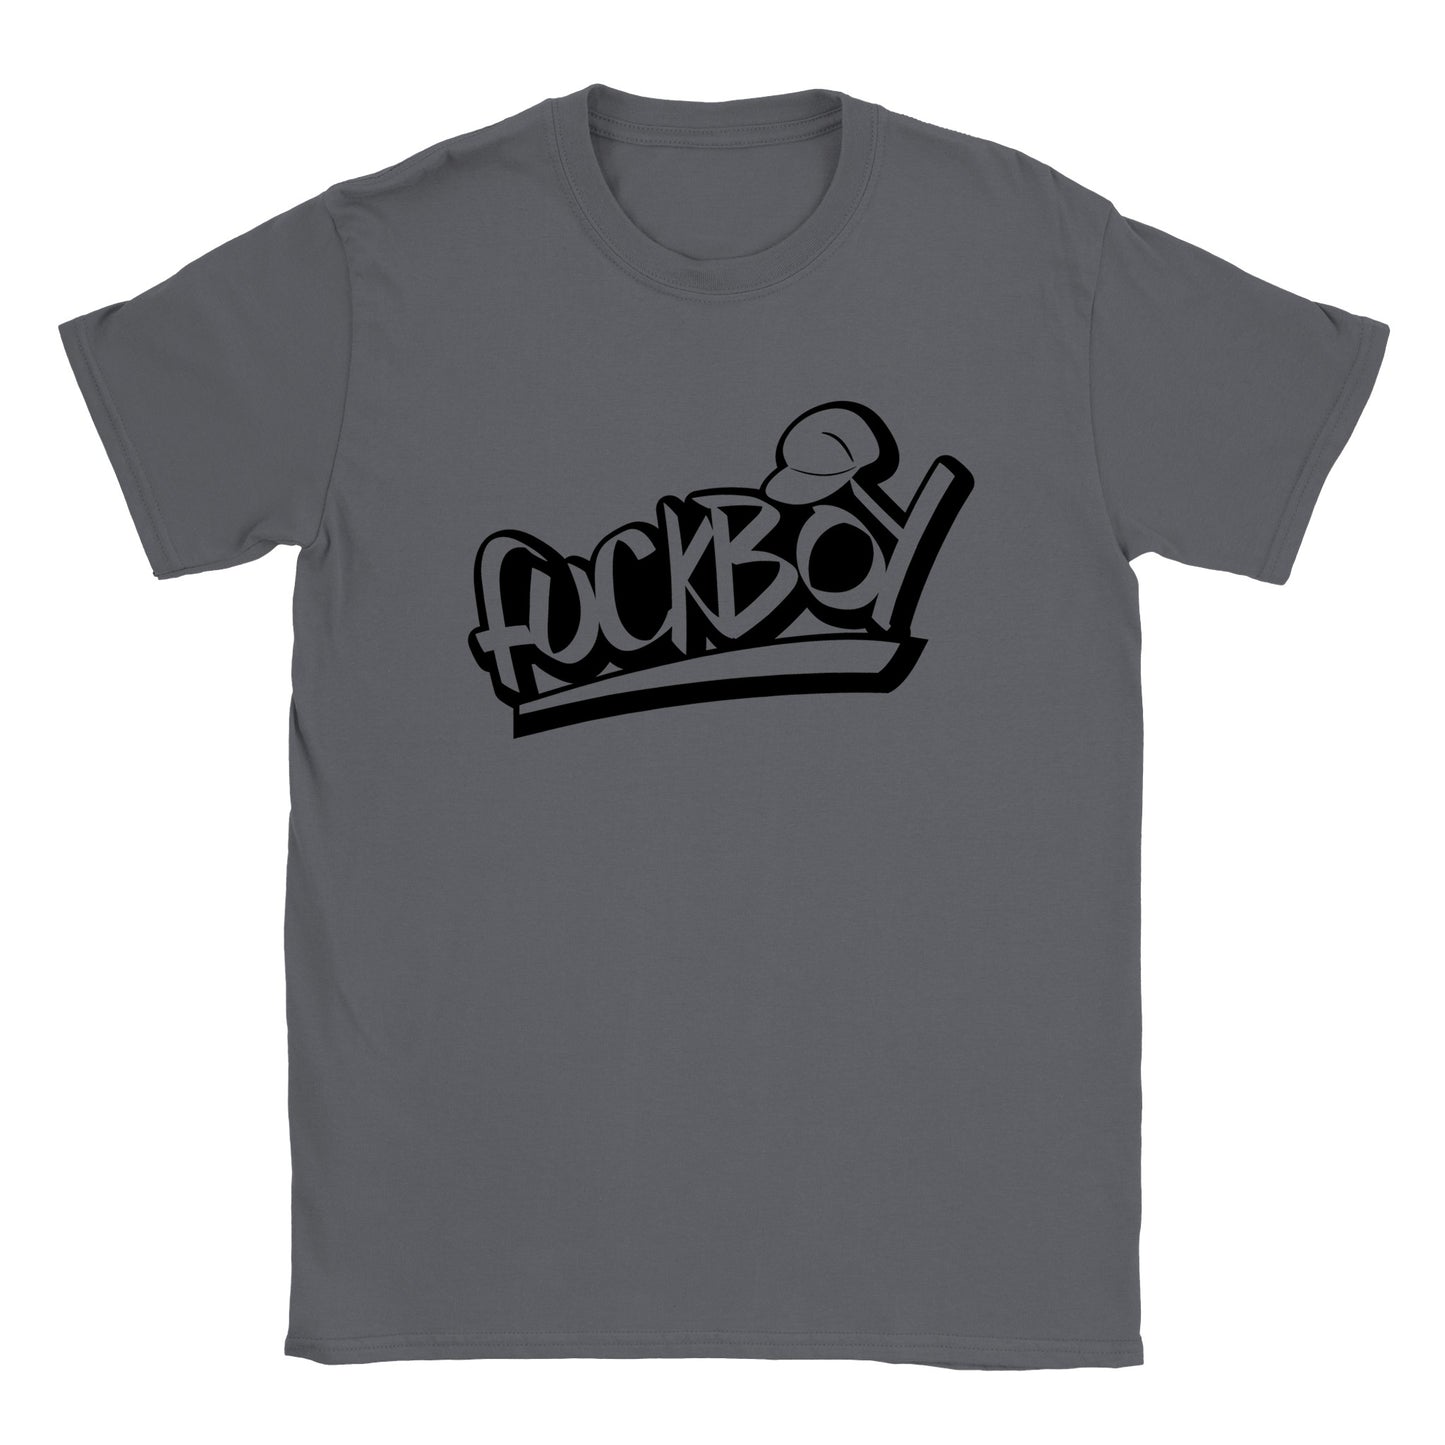 Fuckboy - Classic Unisex Crewneck T-shirt - Mister Snarky's